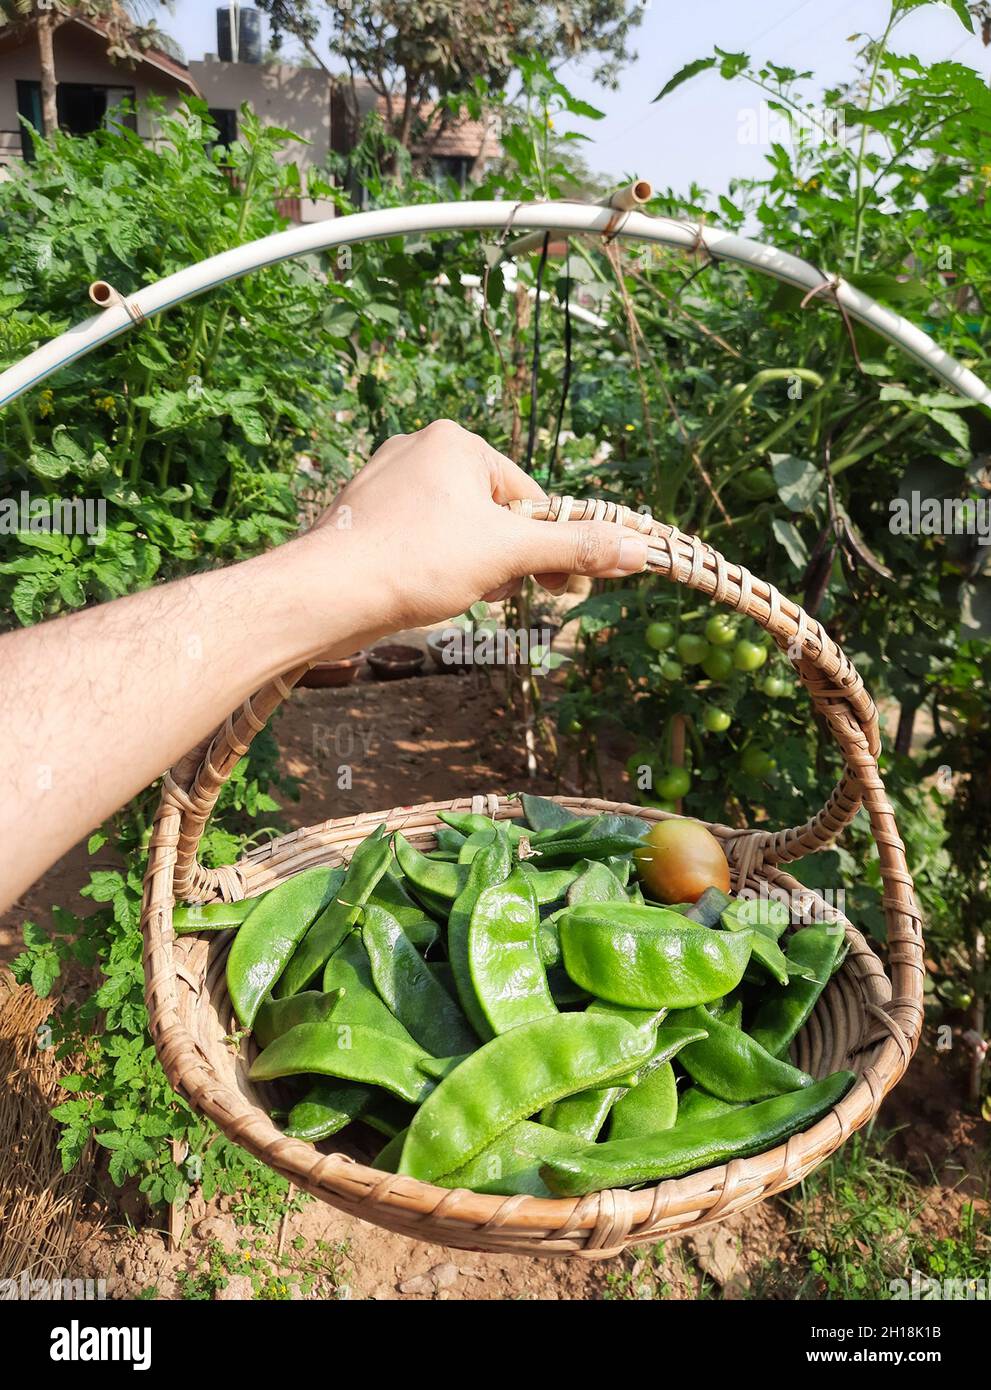 garden fresh beans cultivated in organic farming Stock Photo